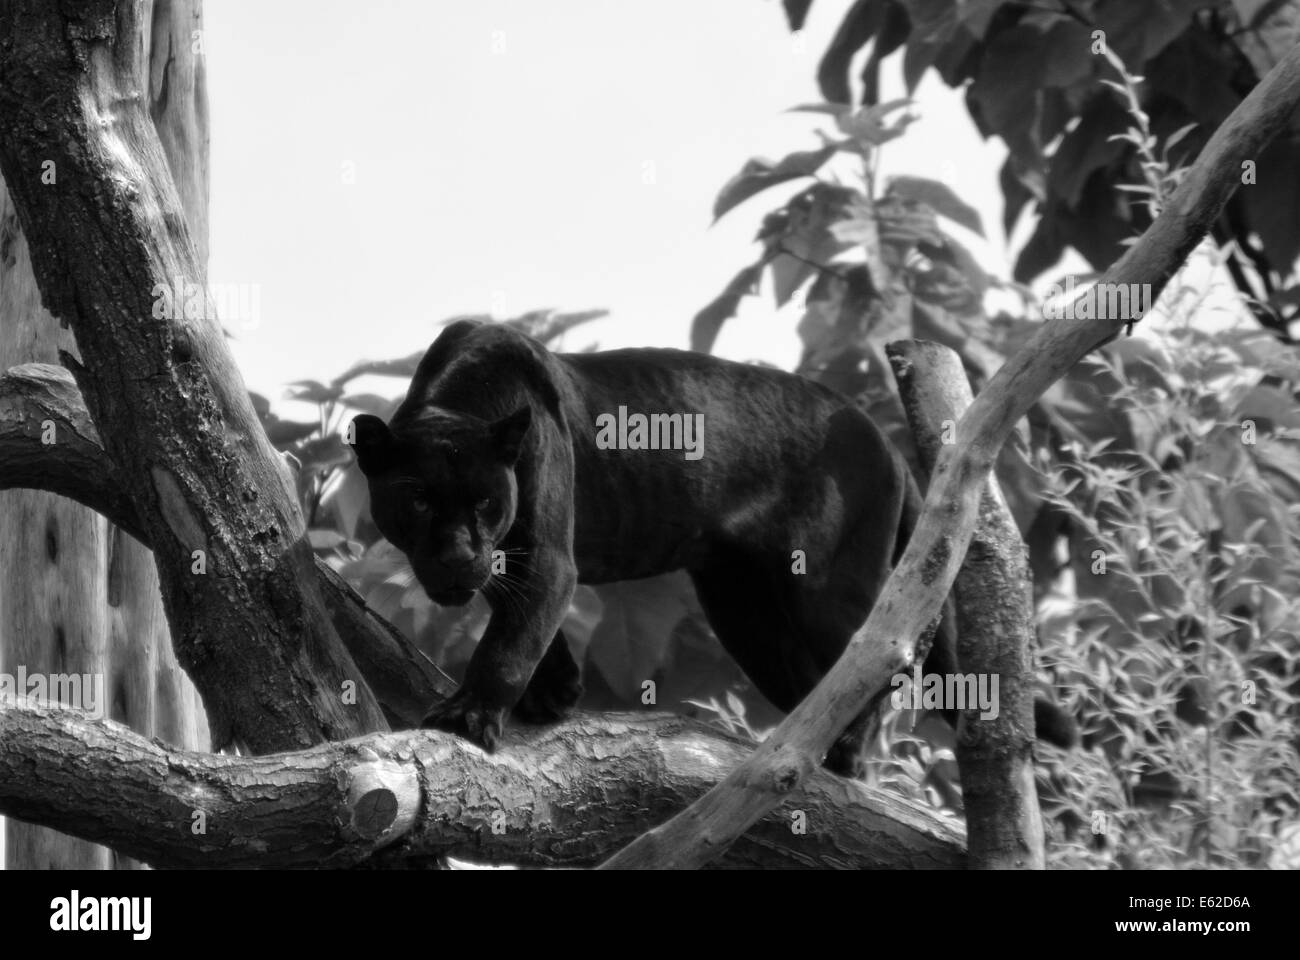 Melanistic Jaguar (Black&White) Stock Photo